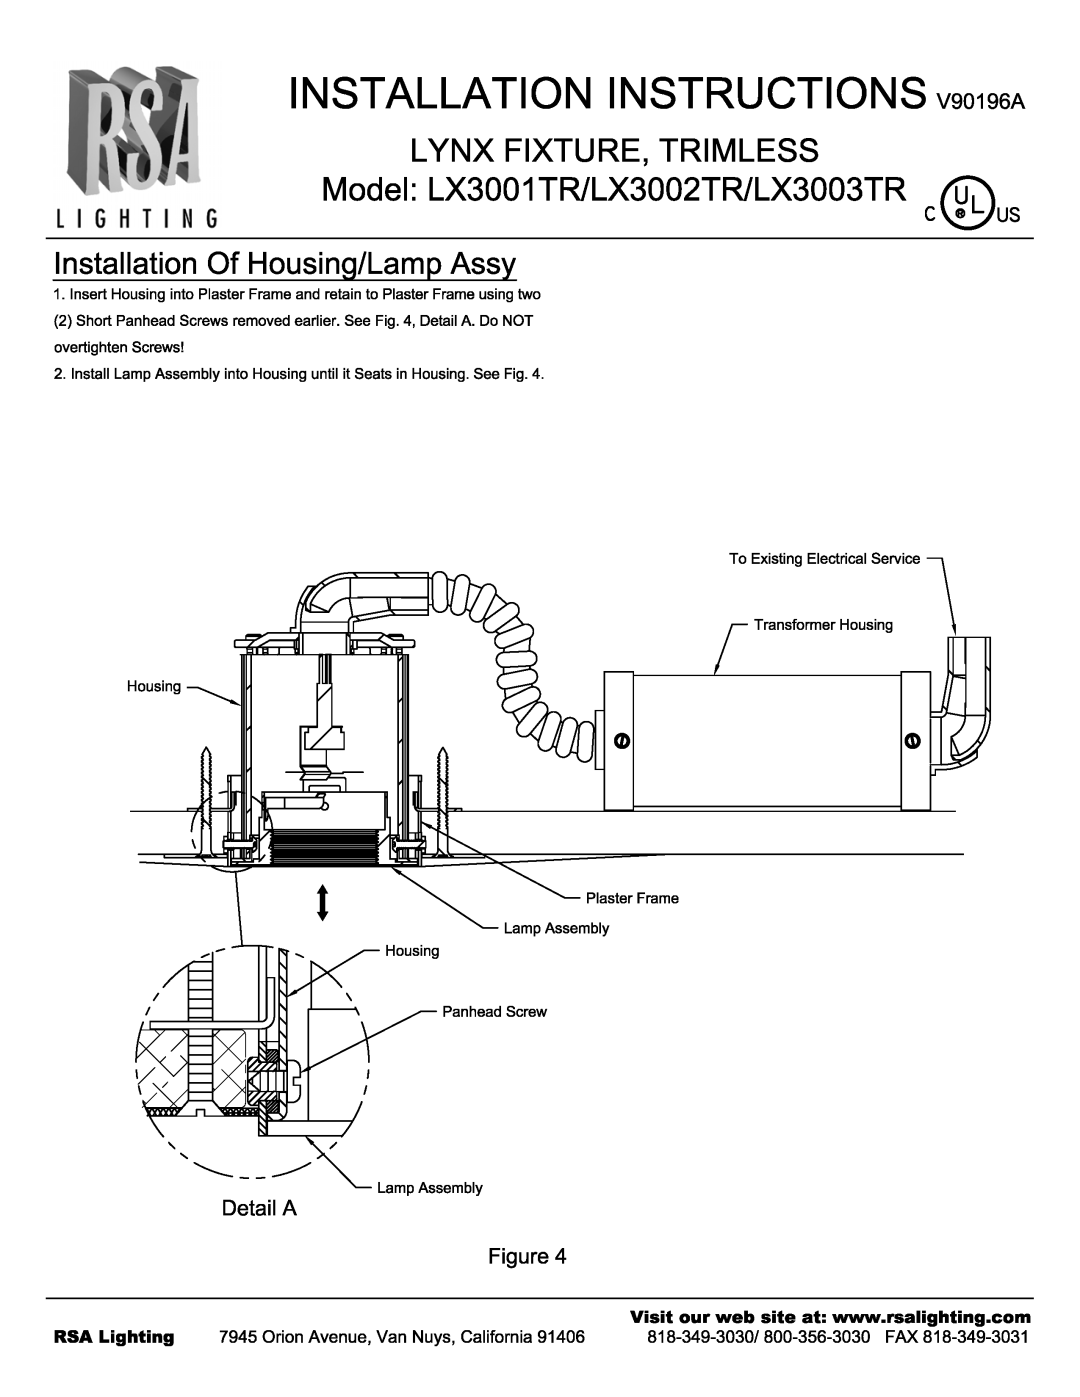 Cooper Lighting LX3003TR, LX3002TR manual 